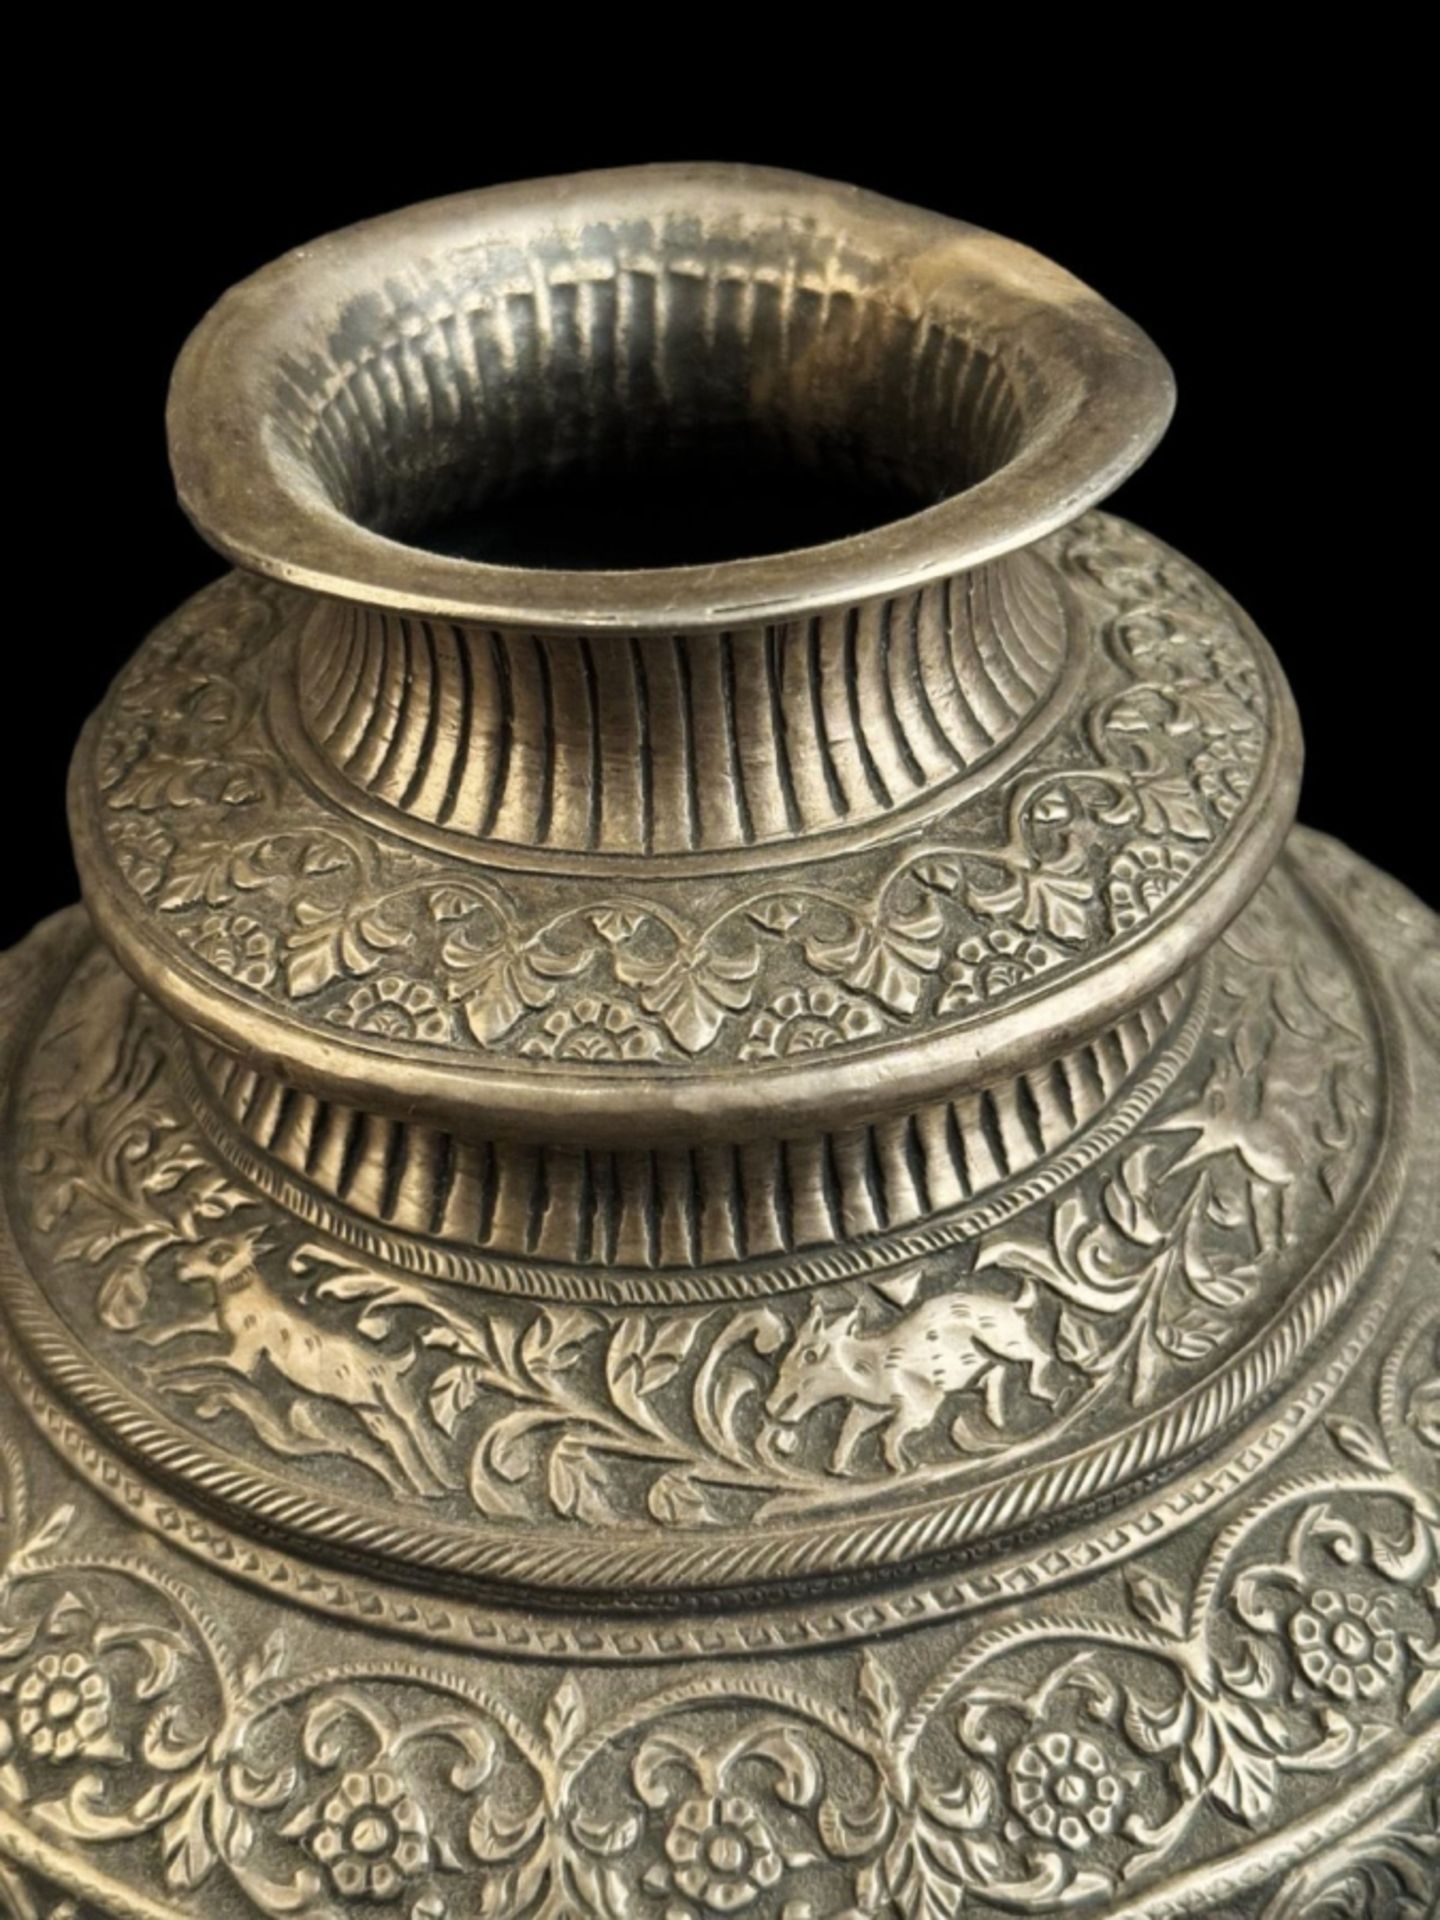 Mughal Indian silver jar - Image 4 of 5